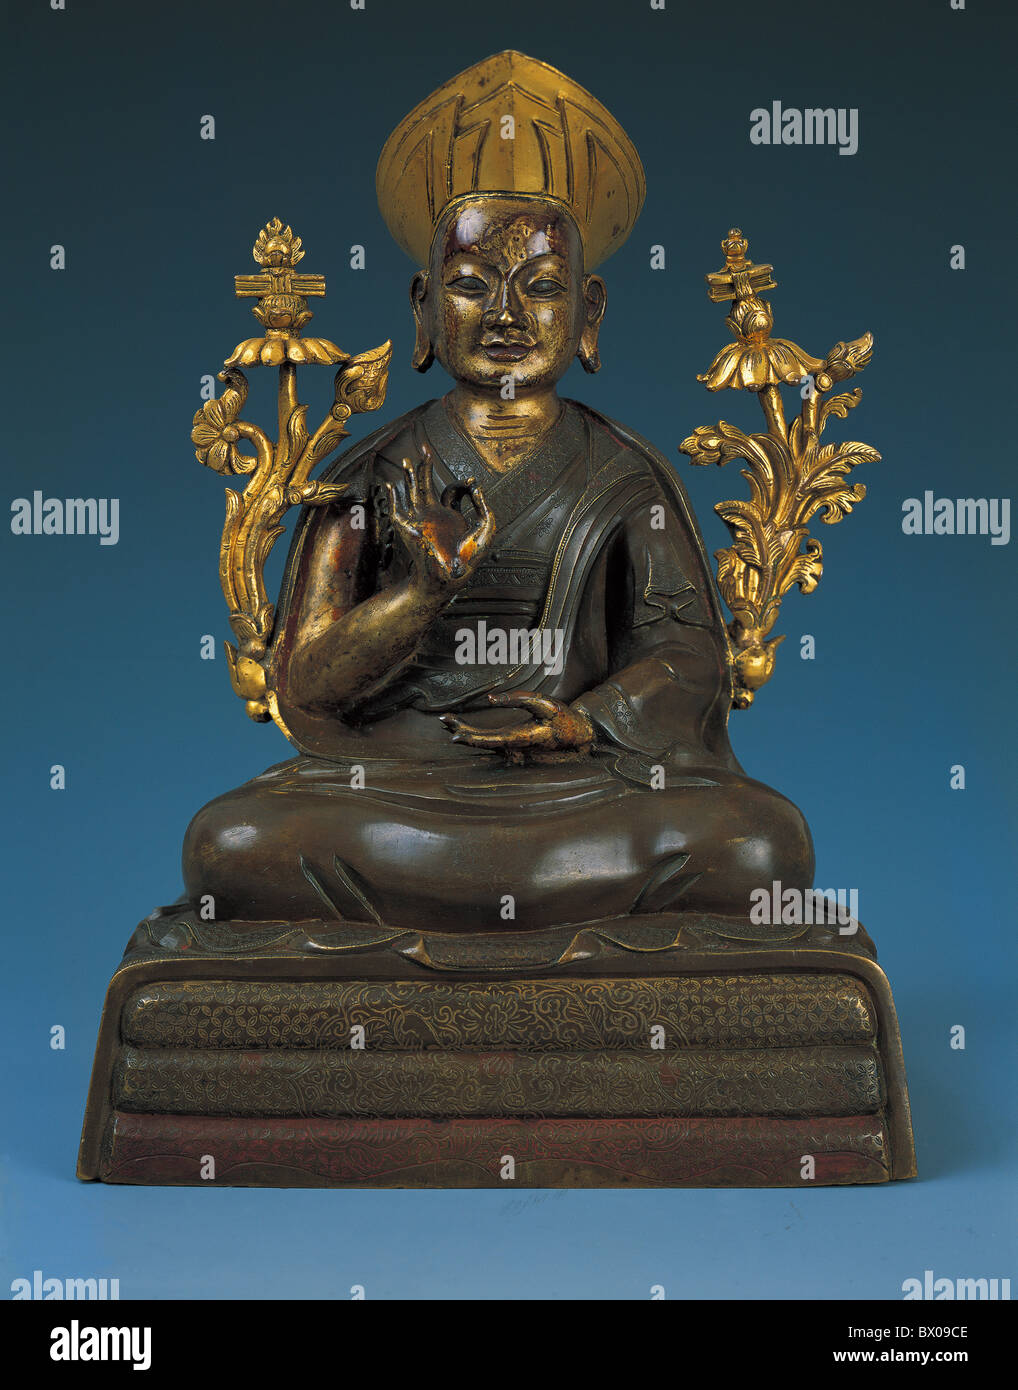 Eminent monk statue, Tibet, China Stock Photo